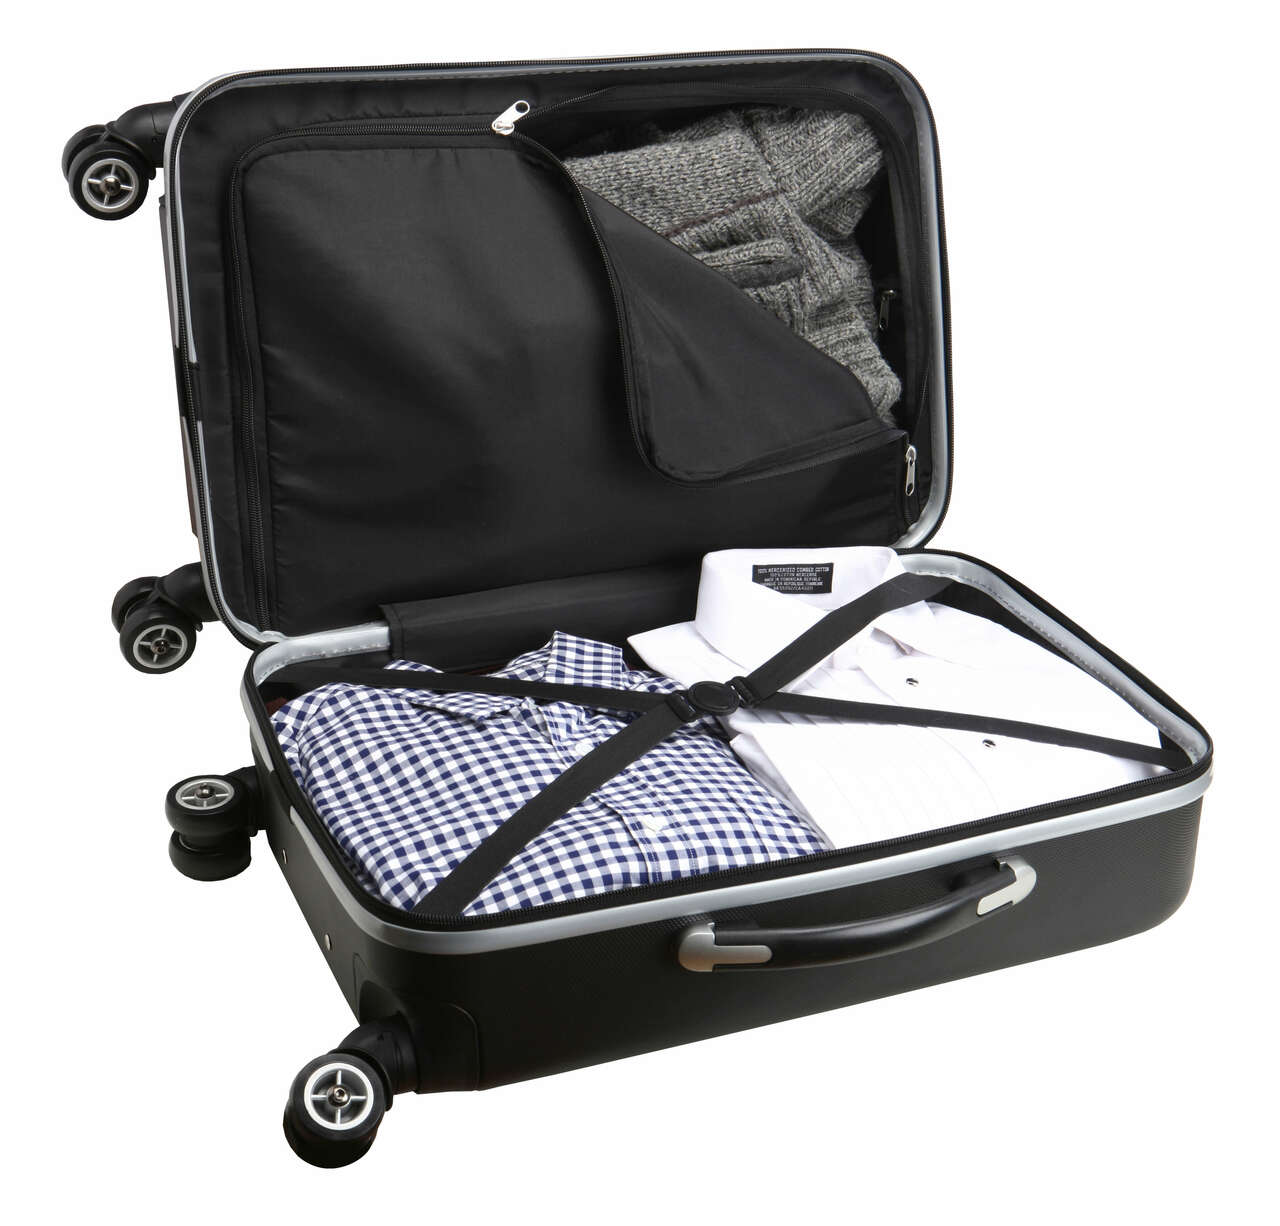 Missouri State University Bears 20" Hardcase Luggage Carry-on Spinner